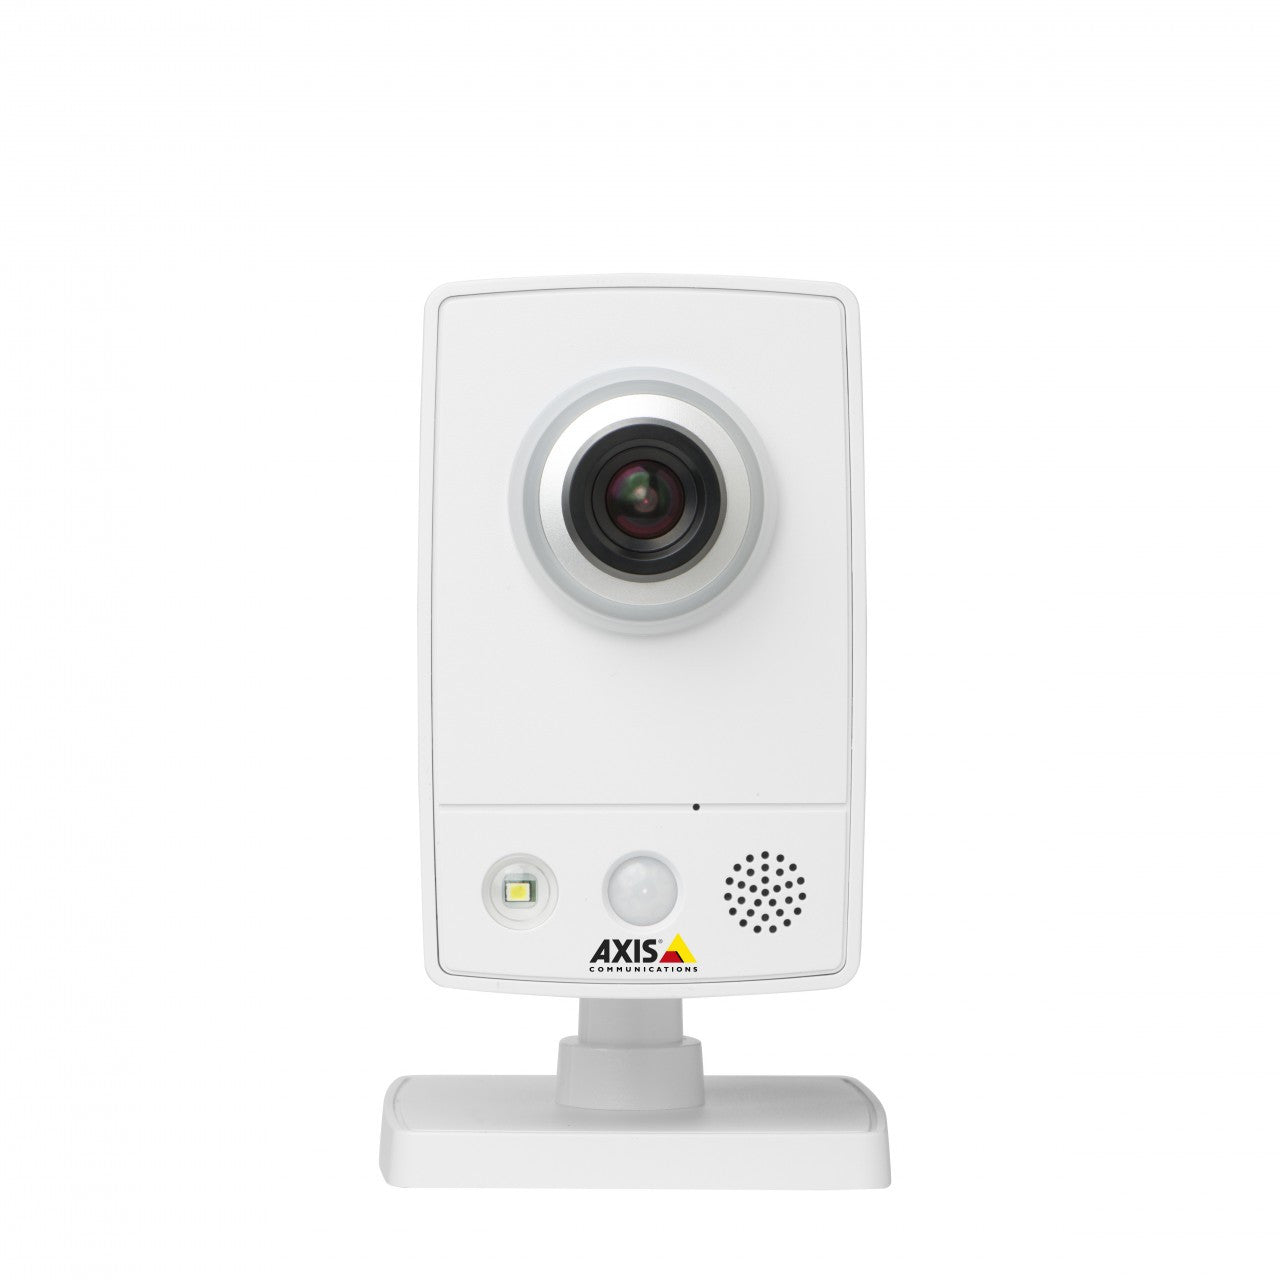 AXIS M1034-W (0522-004) Wireless HDTV Network Camera